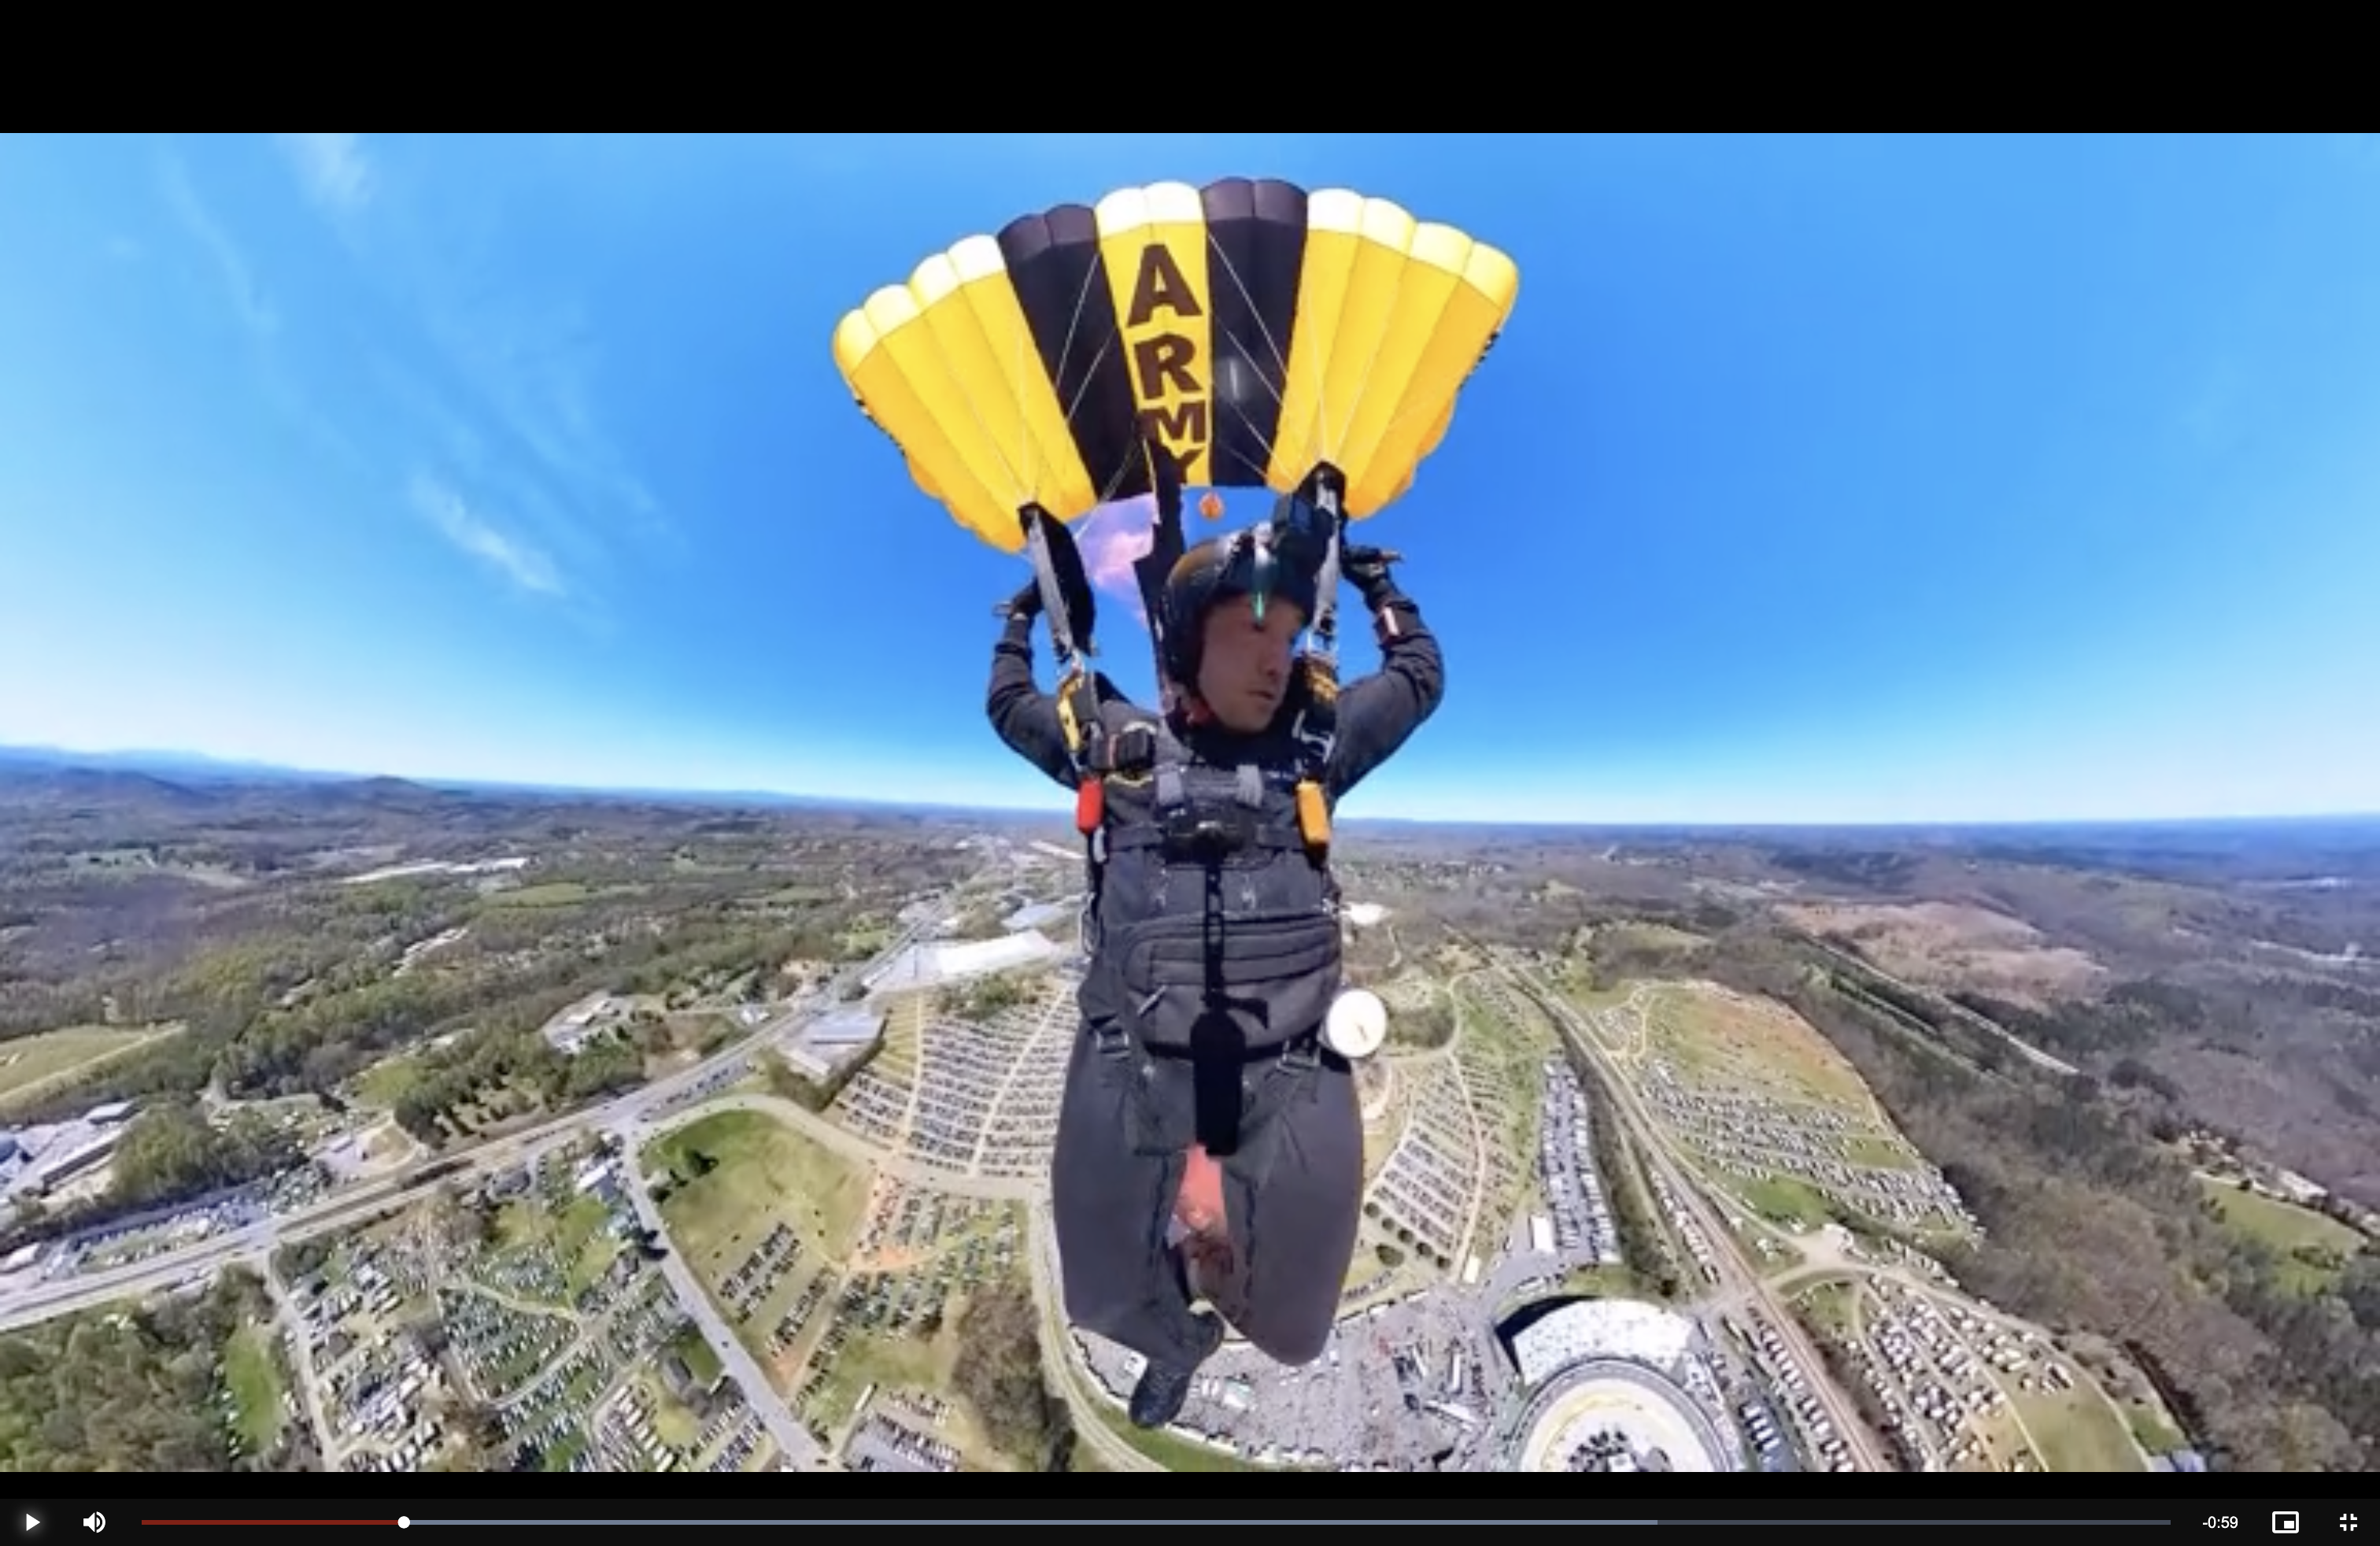 U.S. Army Parachute Team soars over Martinsville Motor Speedway